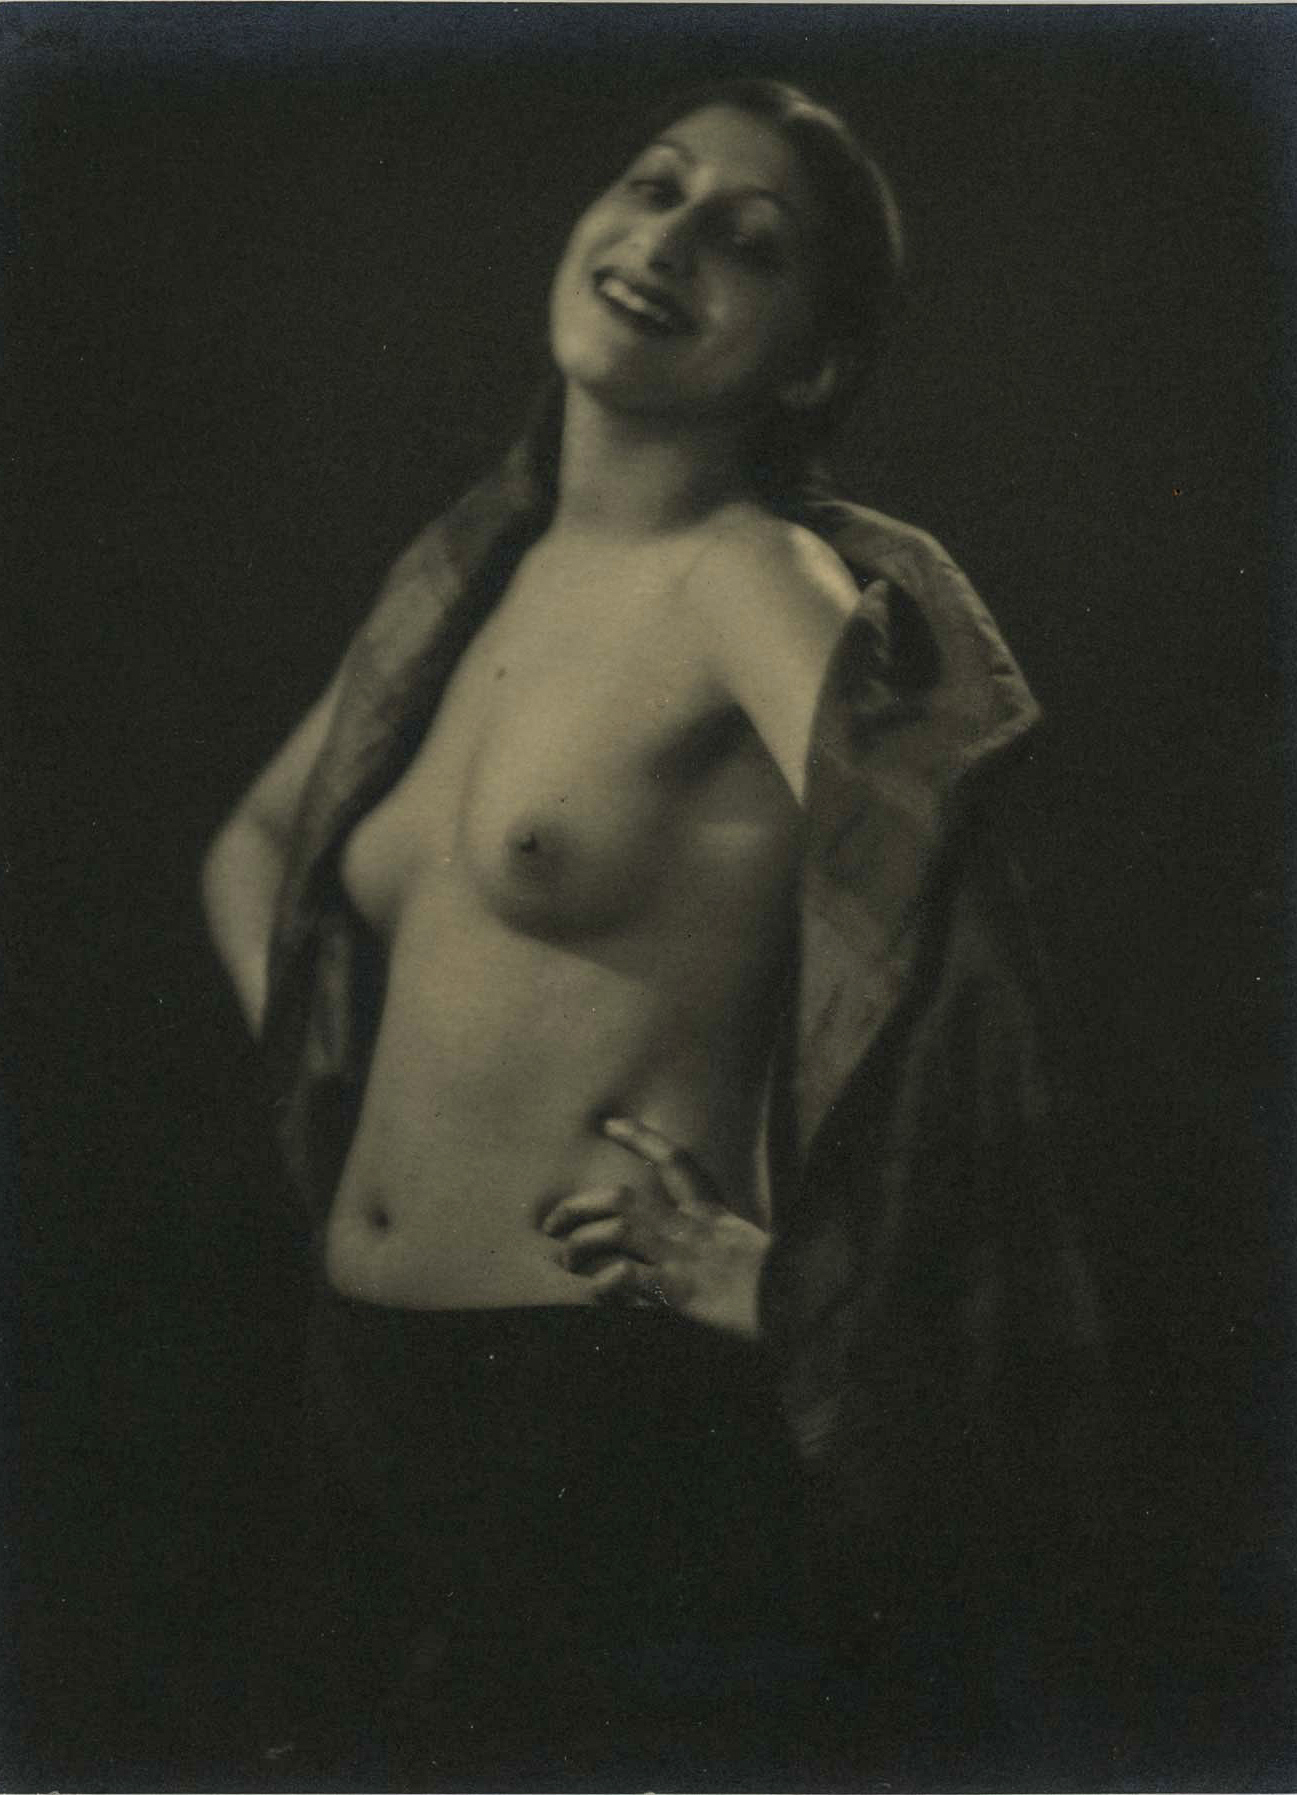 Dr. Gregory Harlip :: Burlesque # 4 (Nu au voile - Nu féminin debout), Germany, ca. 1930. | src Anamorfose and Drouot